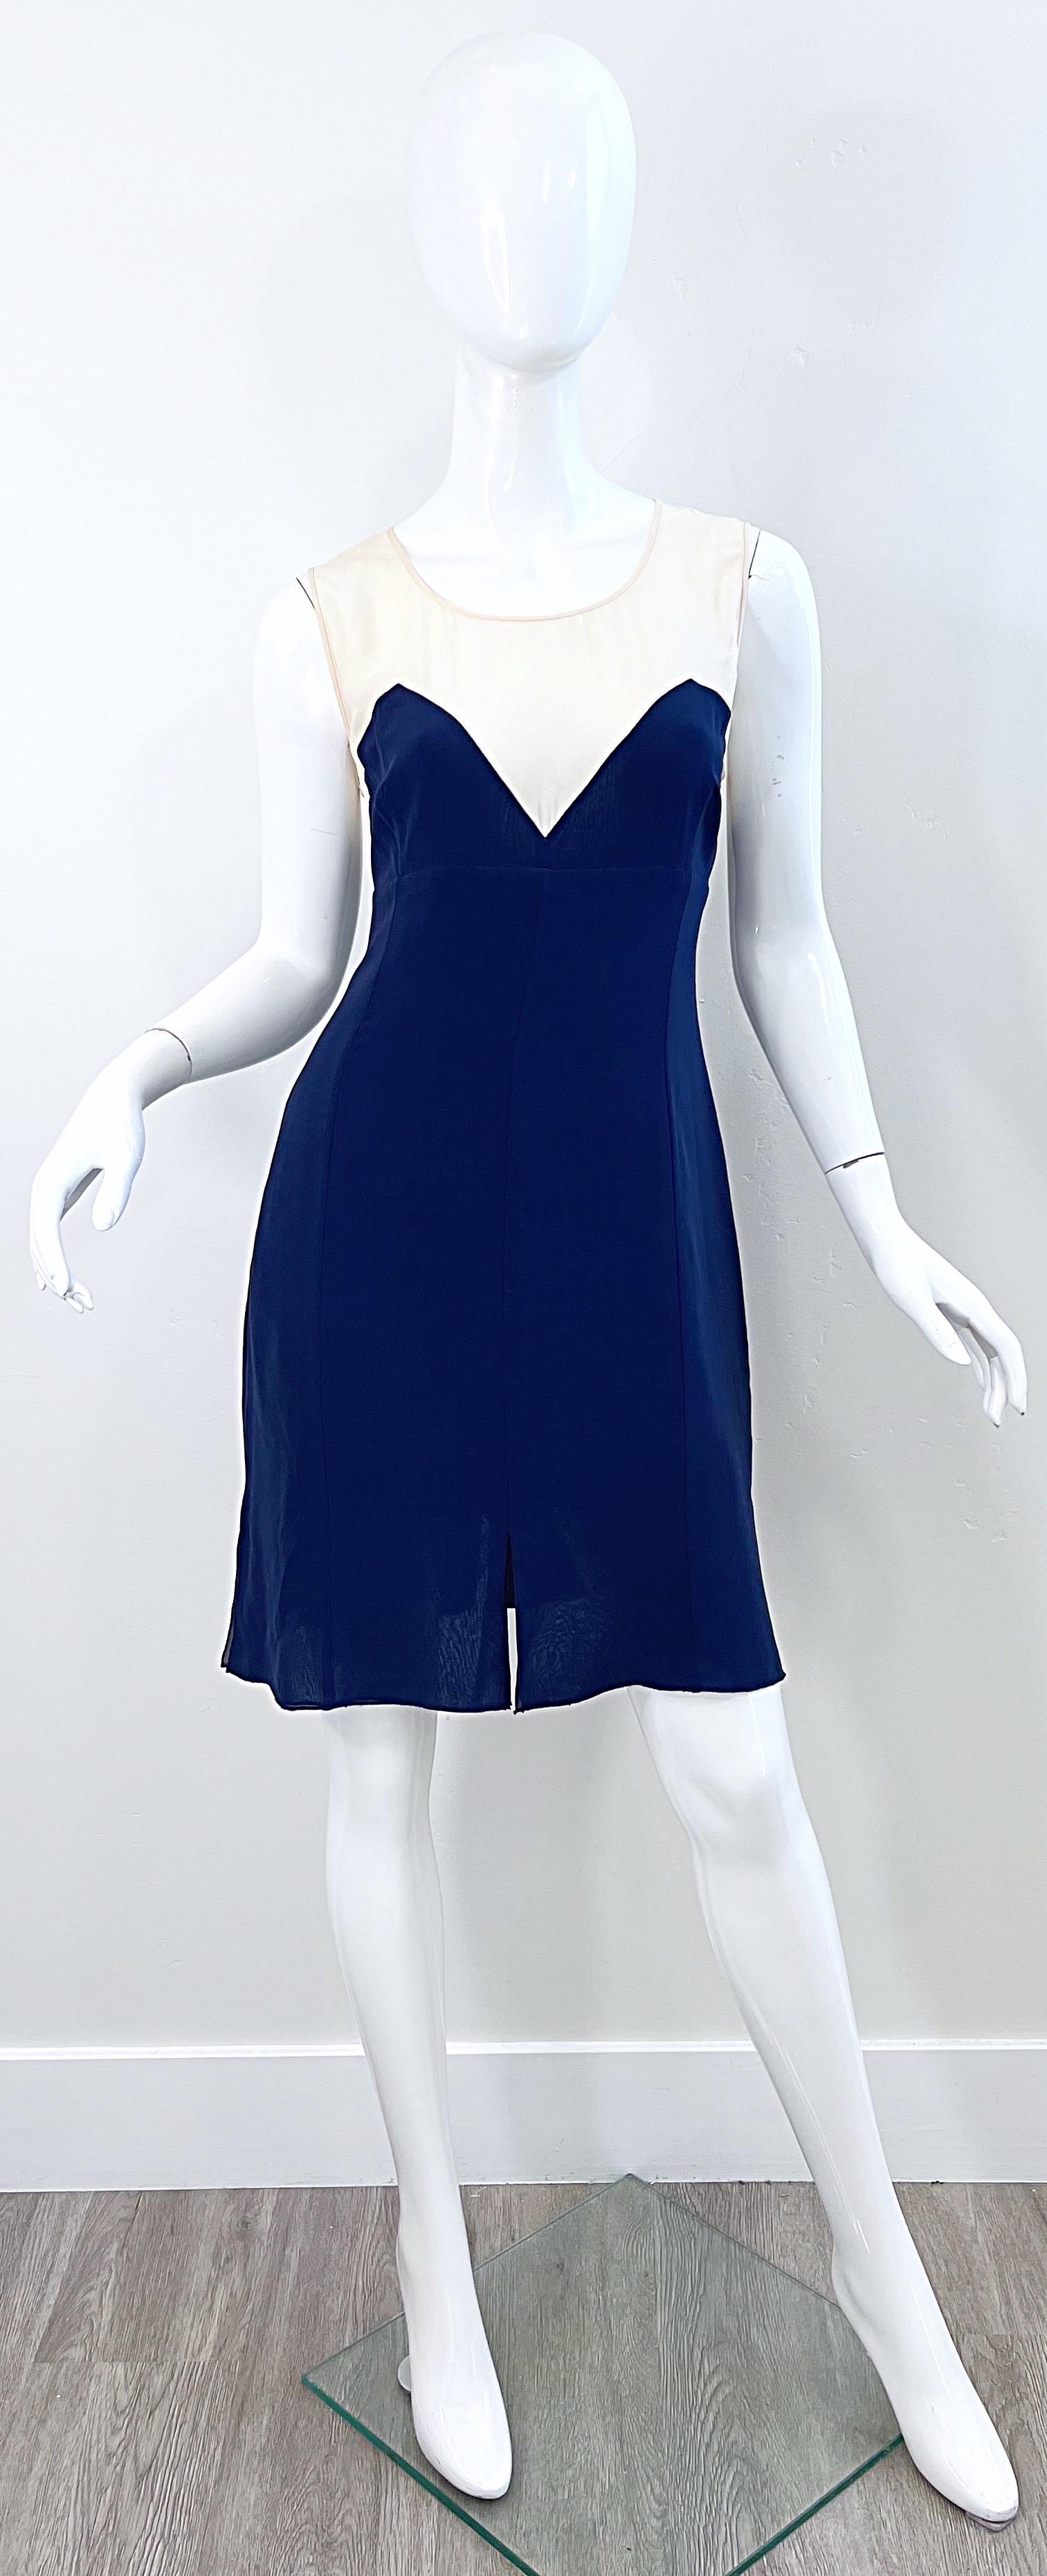 Karl Lagerfeld 1980s Size 44 / US 10 Navy Blue Silk Chiffon Vintage 80s Dress For Sale 7